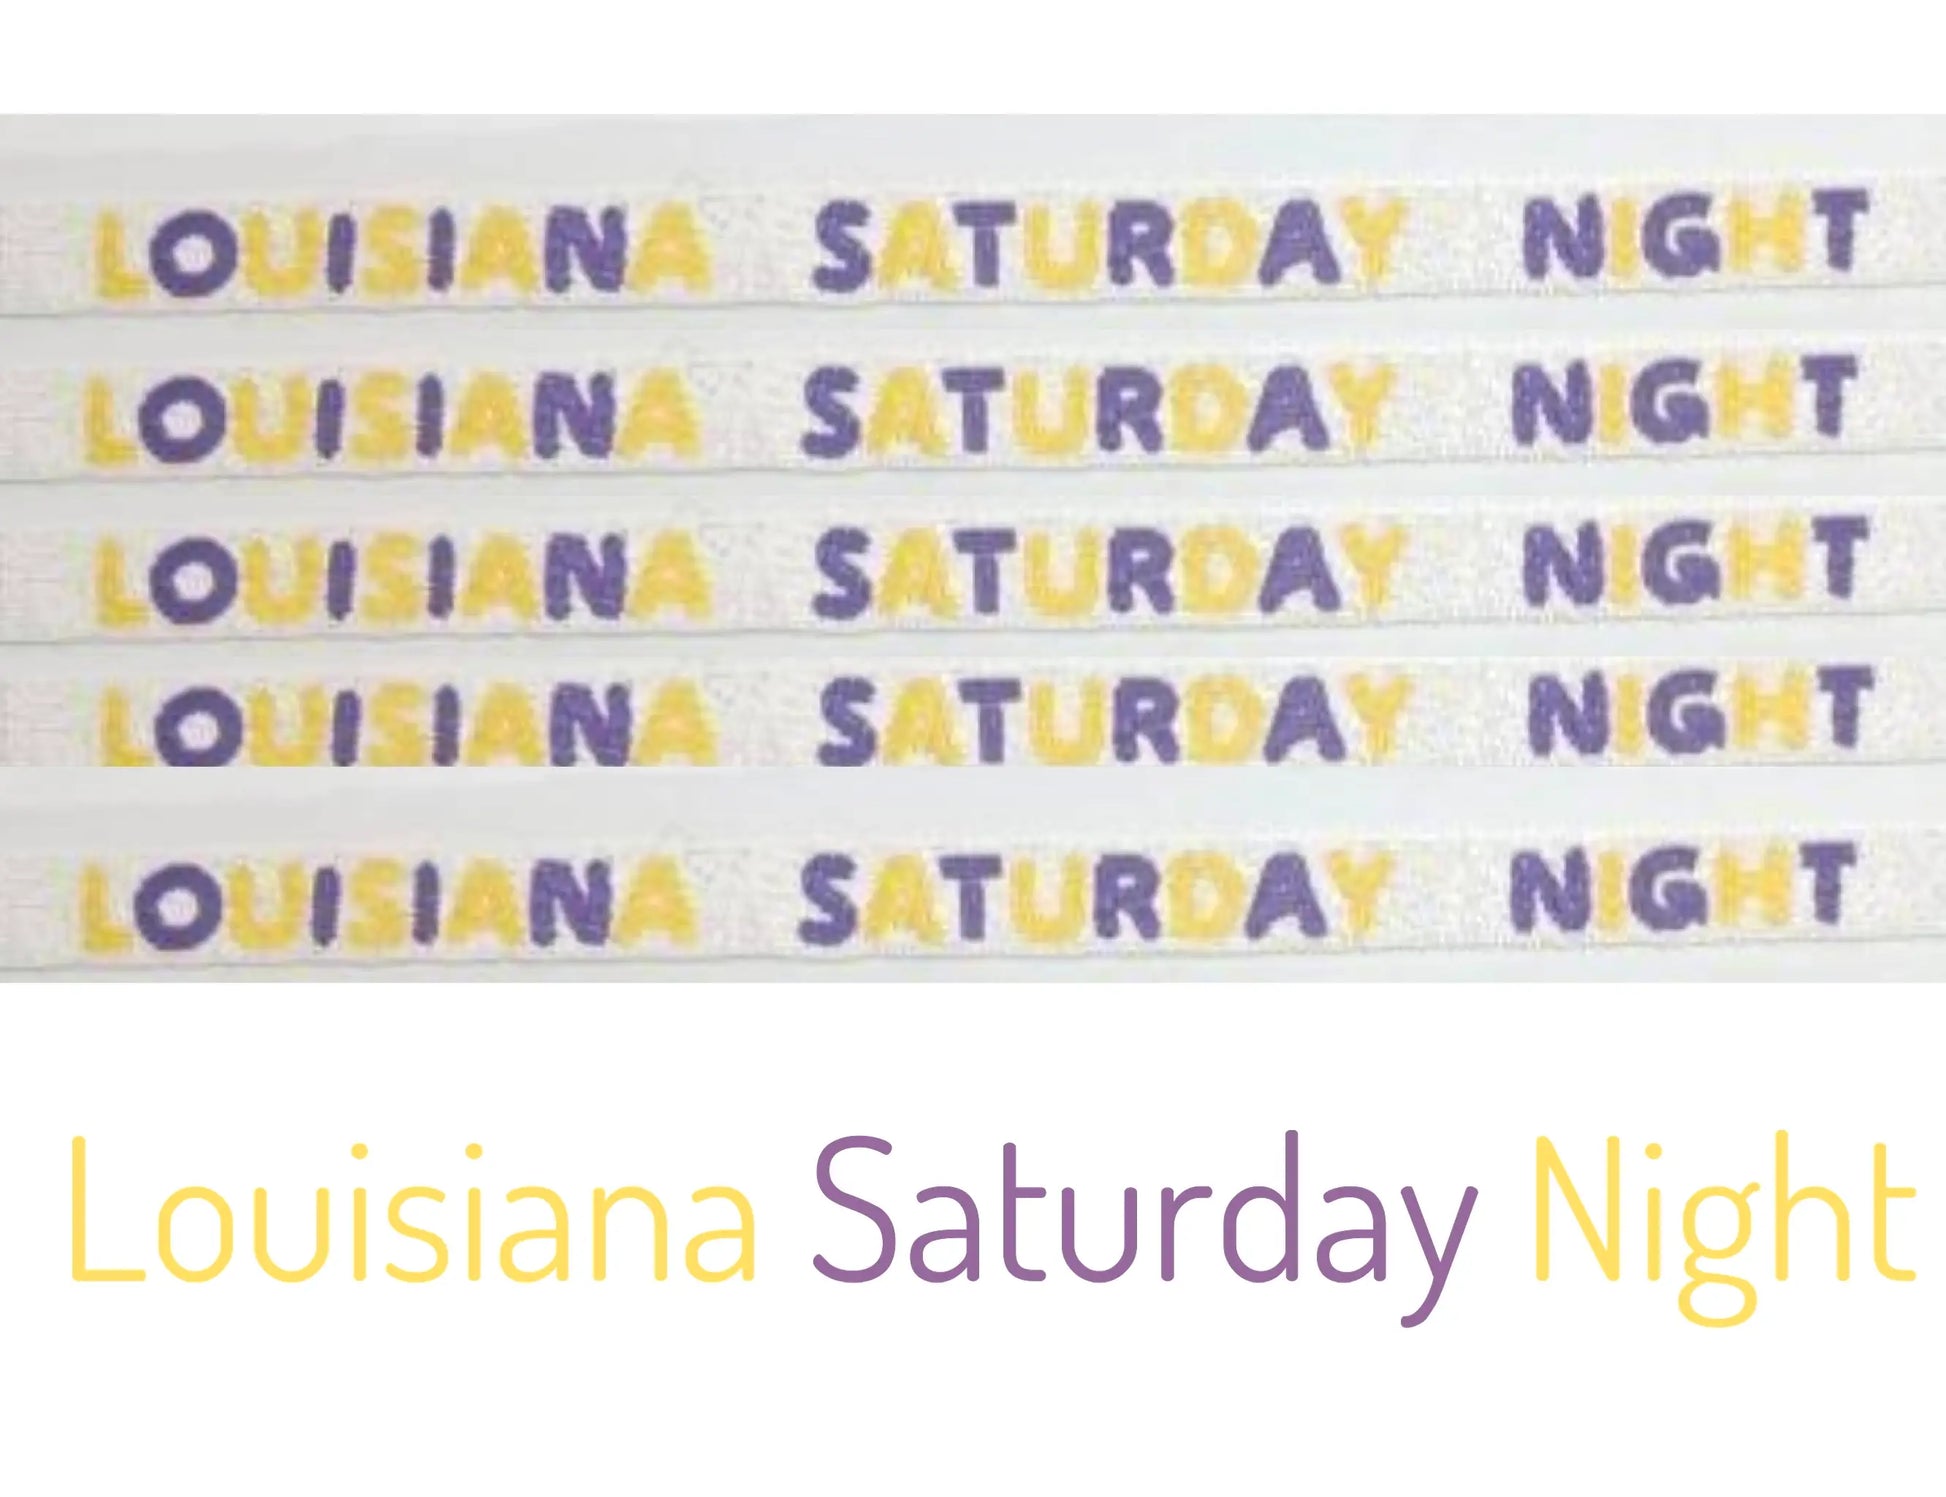 Louisiana Saturday Night Beaded Purse Strap – Care Box 2 Geaux